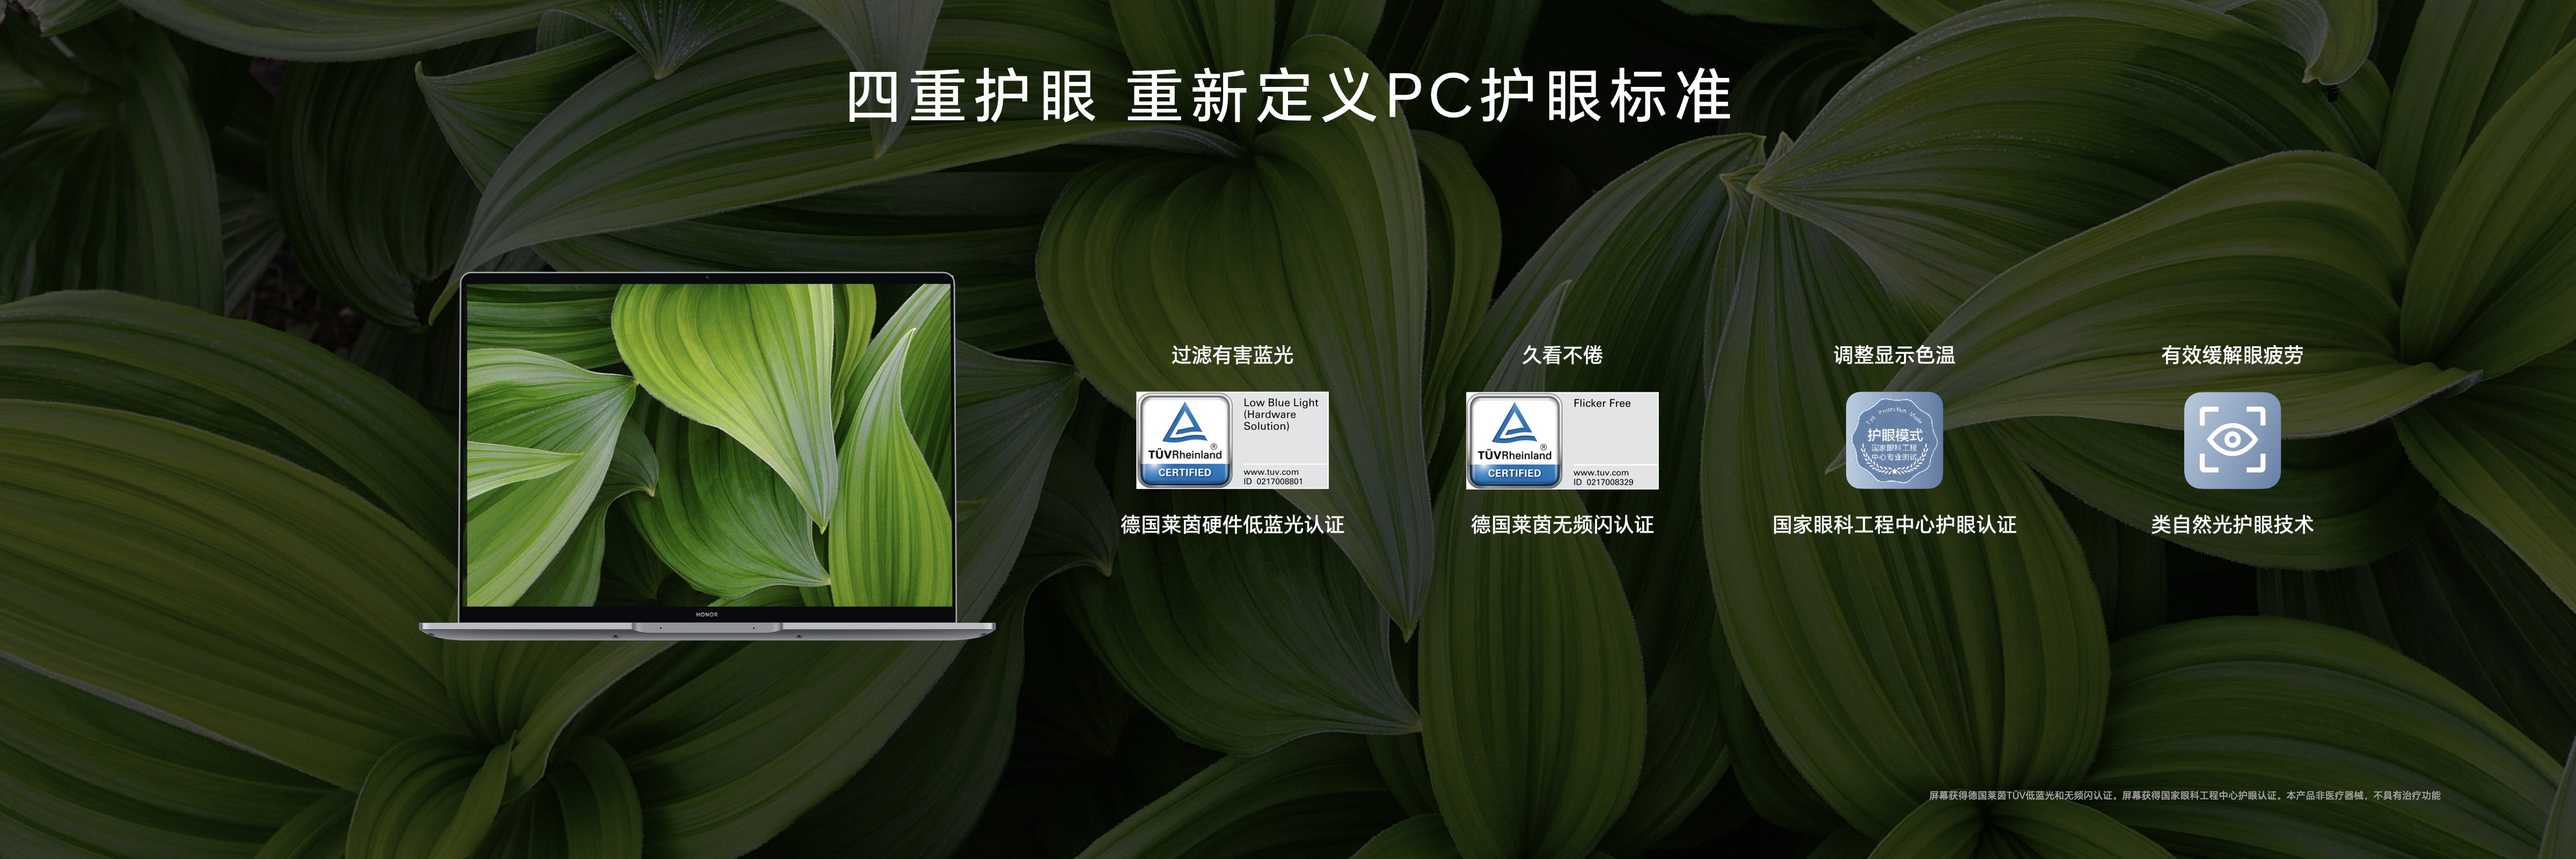 Macintosh HD:Users:guoqing:Desktop:配图:11..jpg